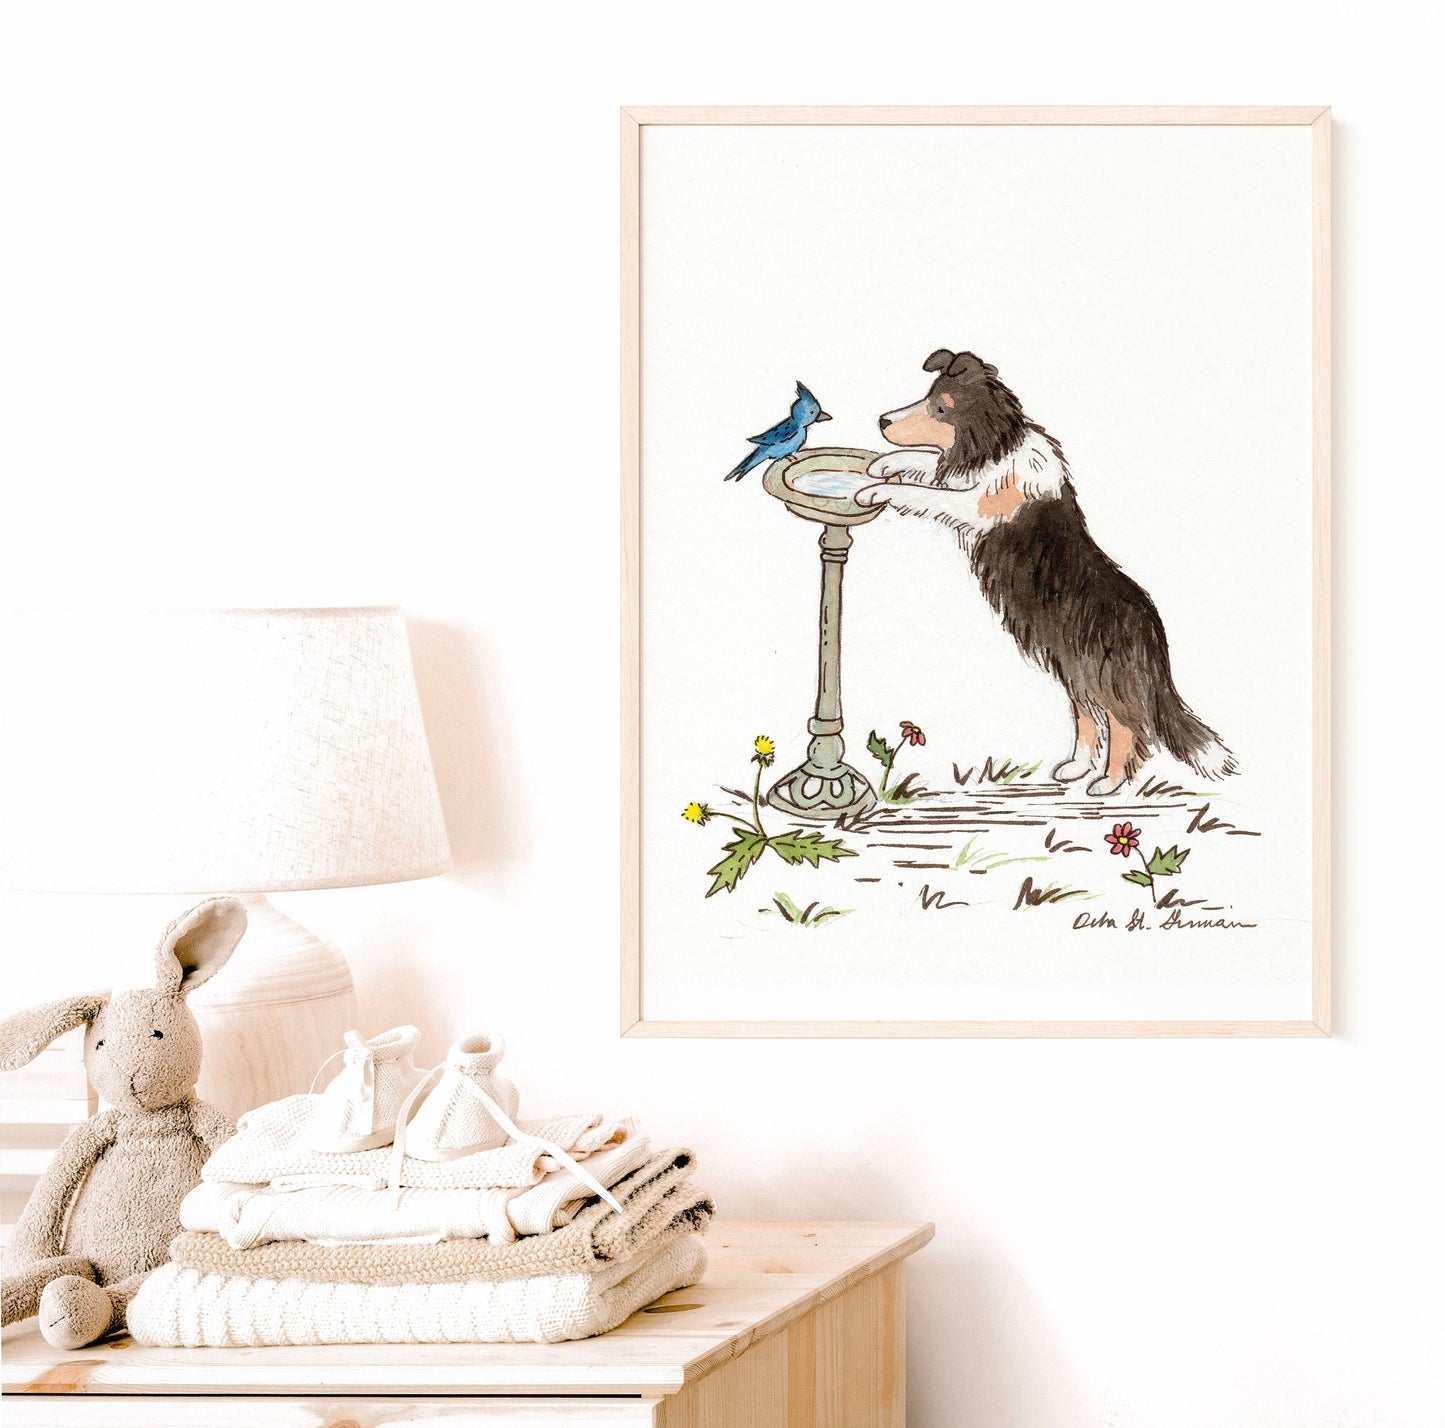 Sheltie Art, Shetland Sheepdog, Tricolor Sheltie, Cute Sheltie Art, Nursery Art, Children's Art, Sheltie Gift, Sheltie Lovers, Cute Dog Art